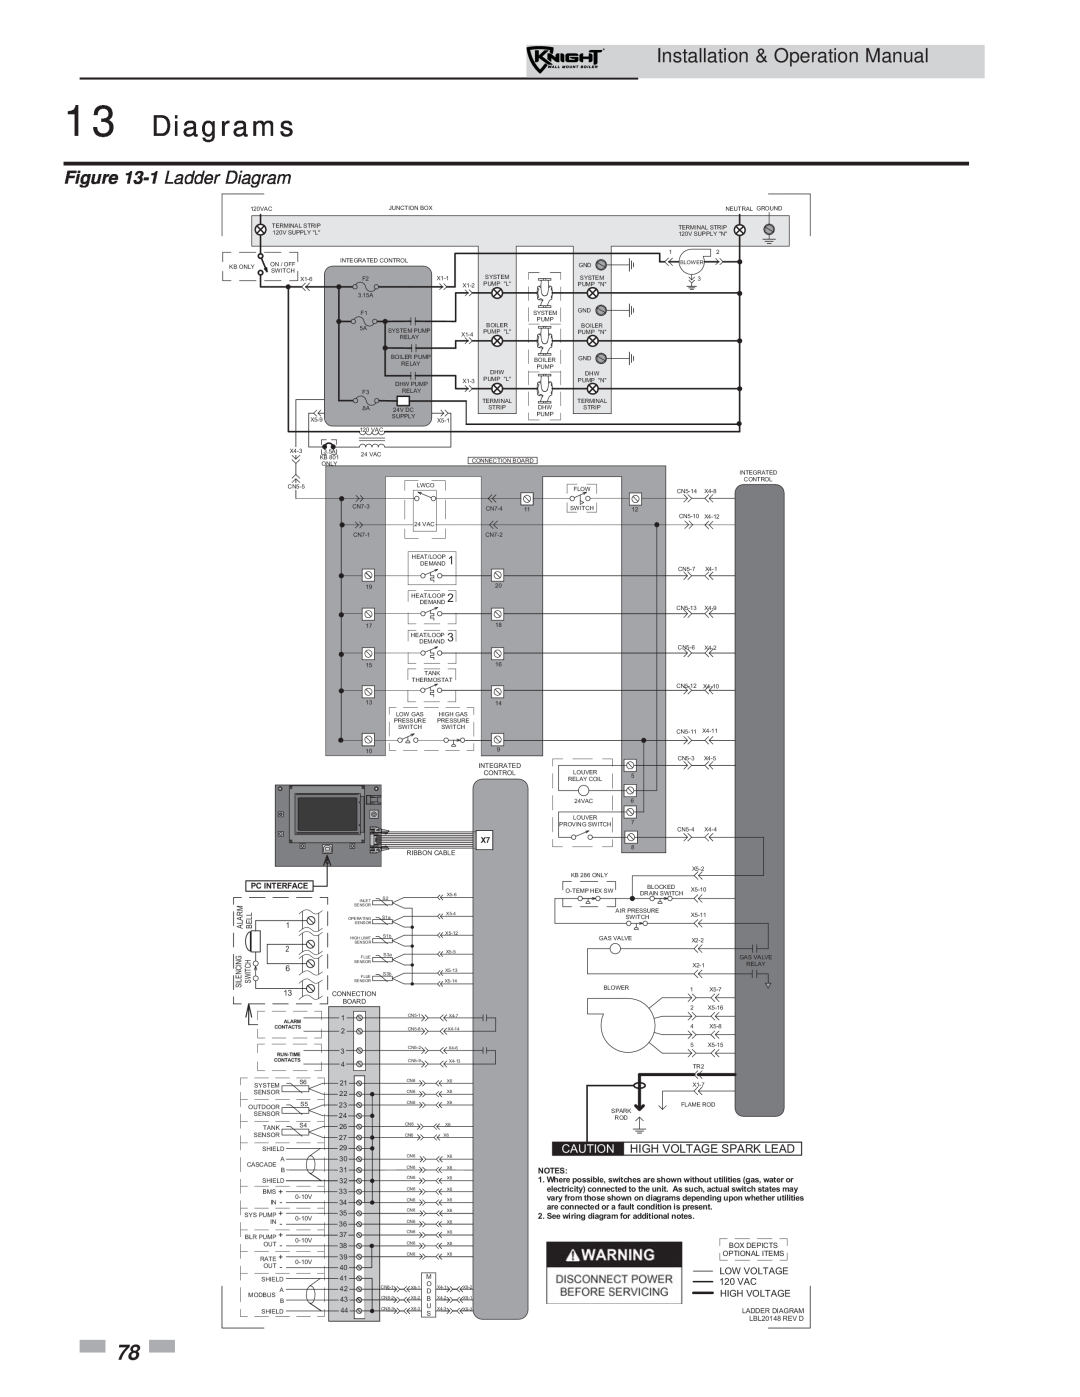 Lochinvar 51-211 operation manual Diagrams, 1 Ladder Diagram, Pc Interface 